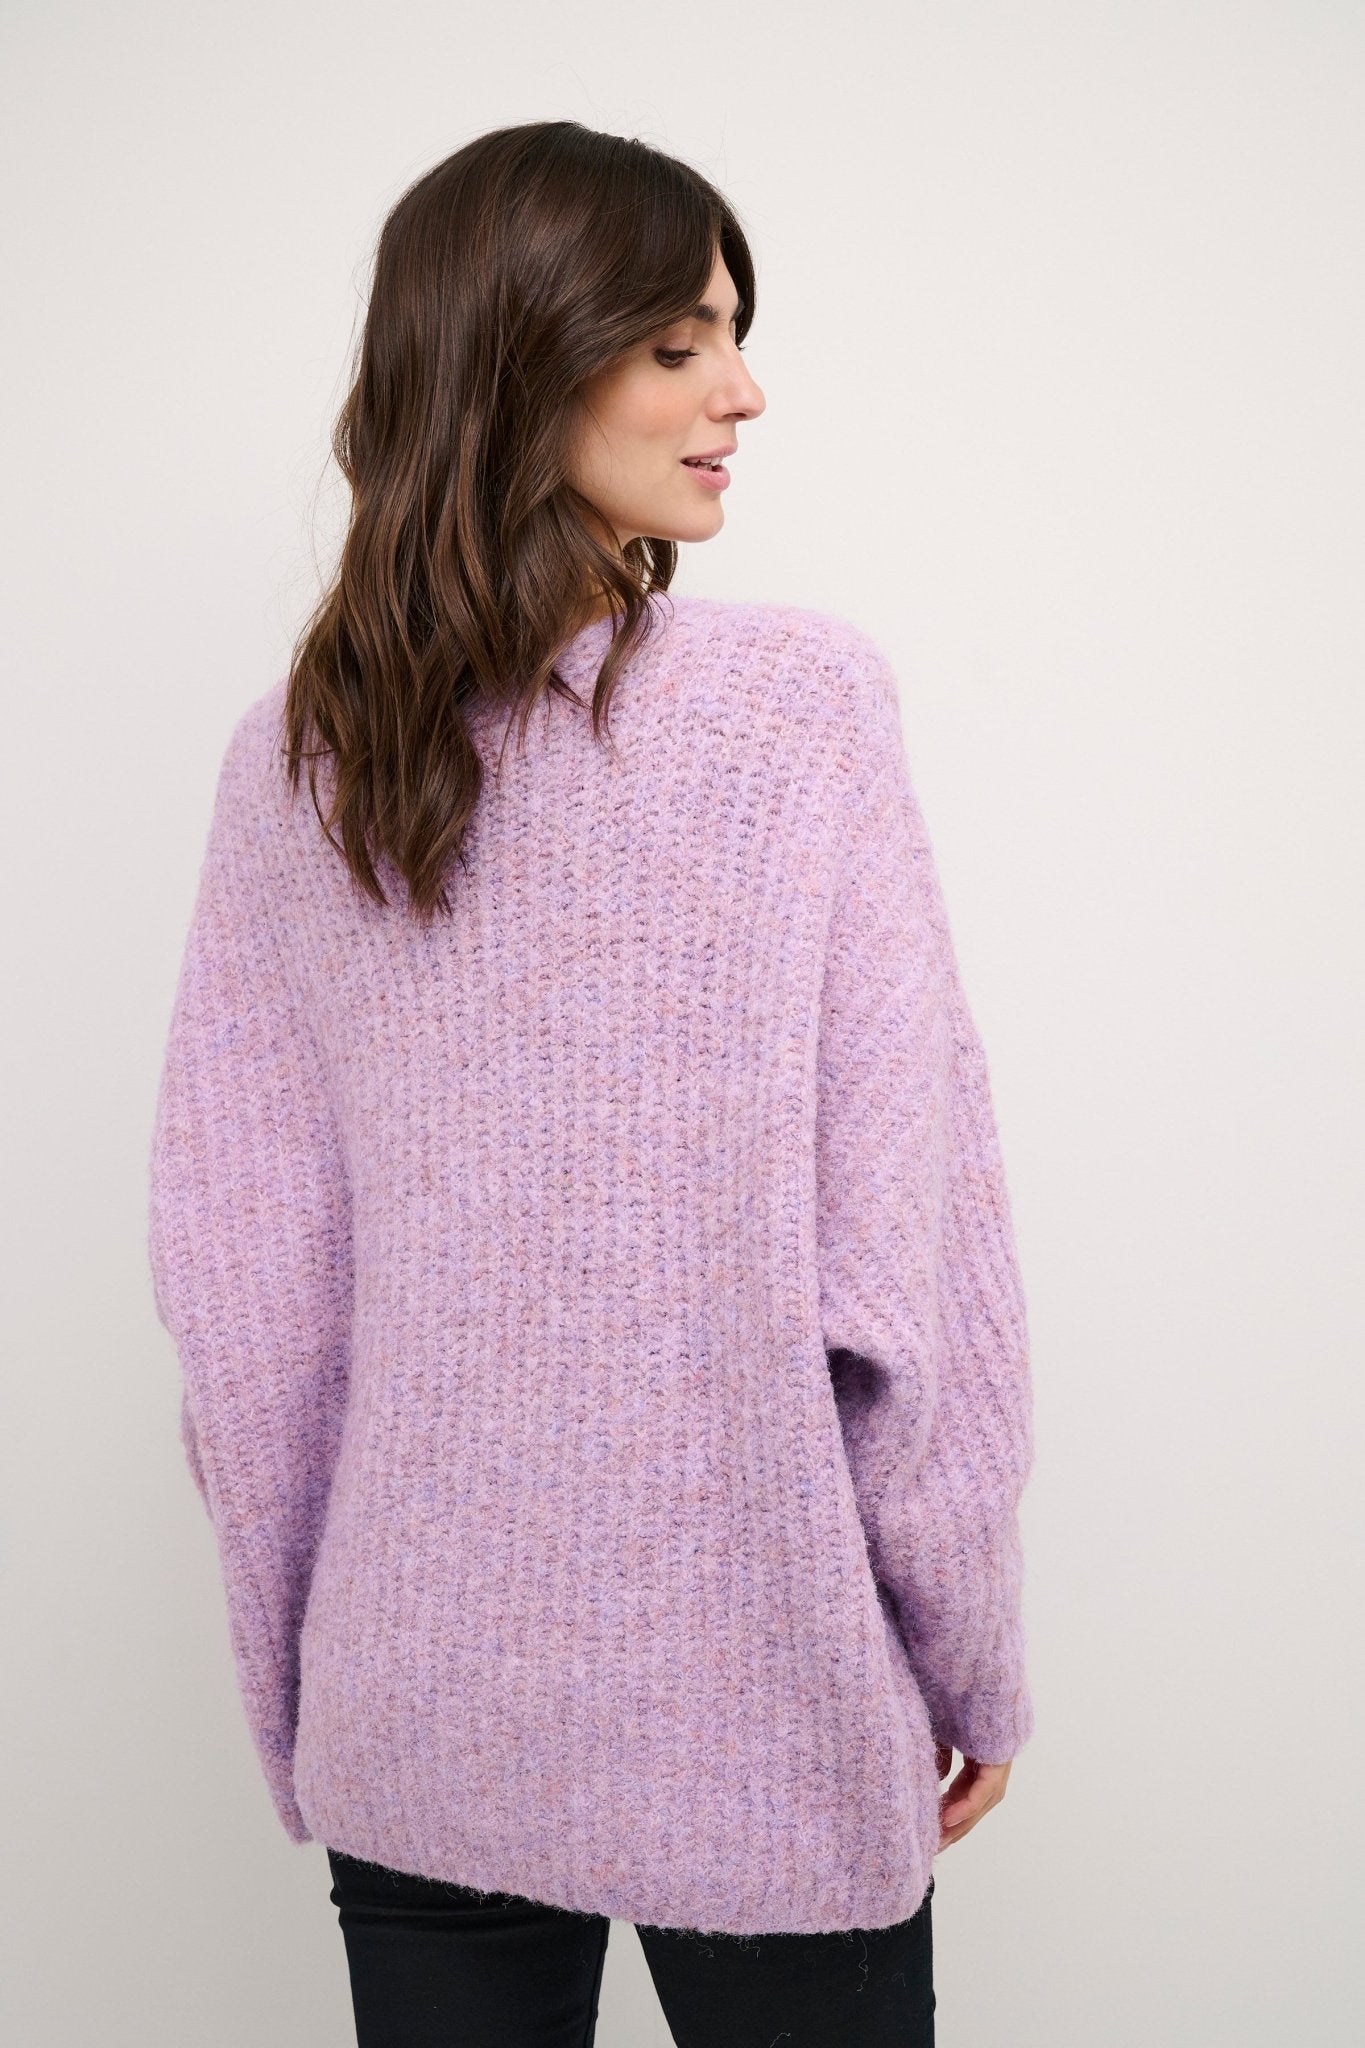 Brava knit pullover by Culture - Orchid Melange - Blue Sky Fashions & Lingerie